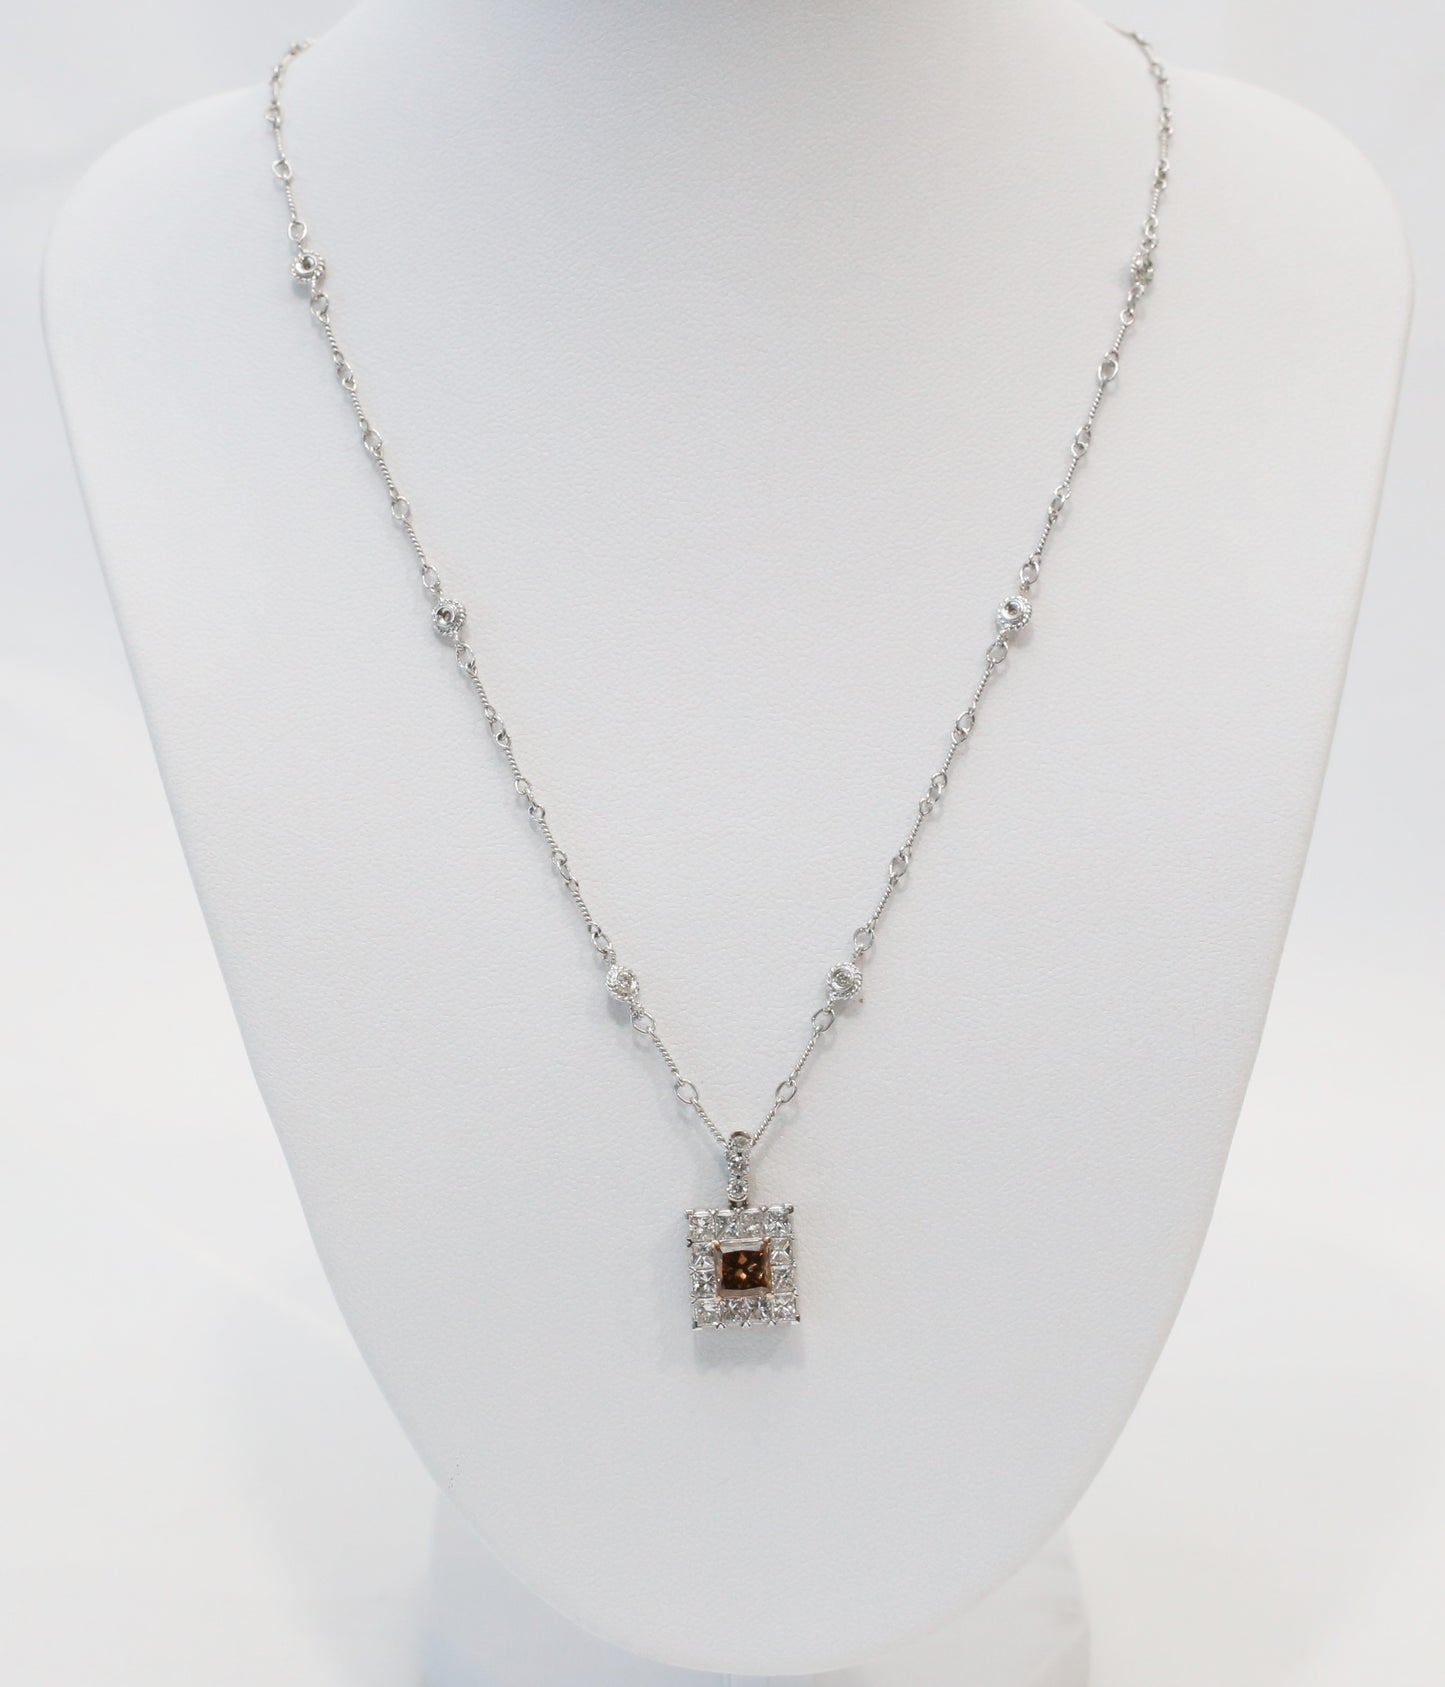 14k White Gold White & Chocolate Diamond Pendant Necklace, 16 inches - 6.8g